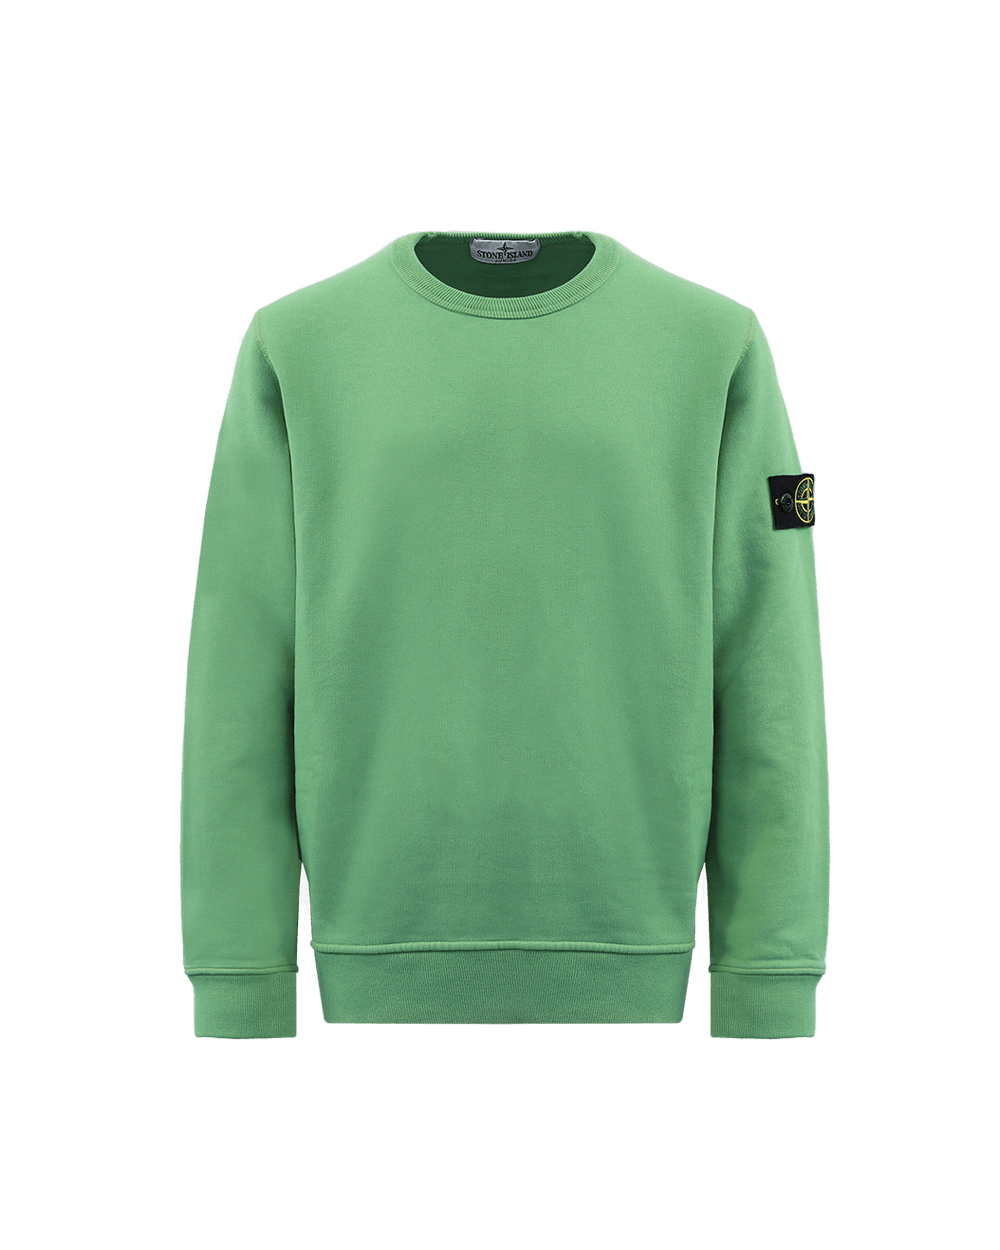 online you & Eleganza shop Vesten — In Sweaters Sale at Kids